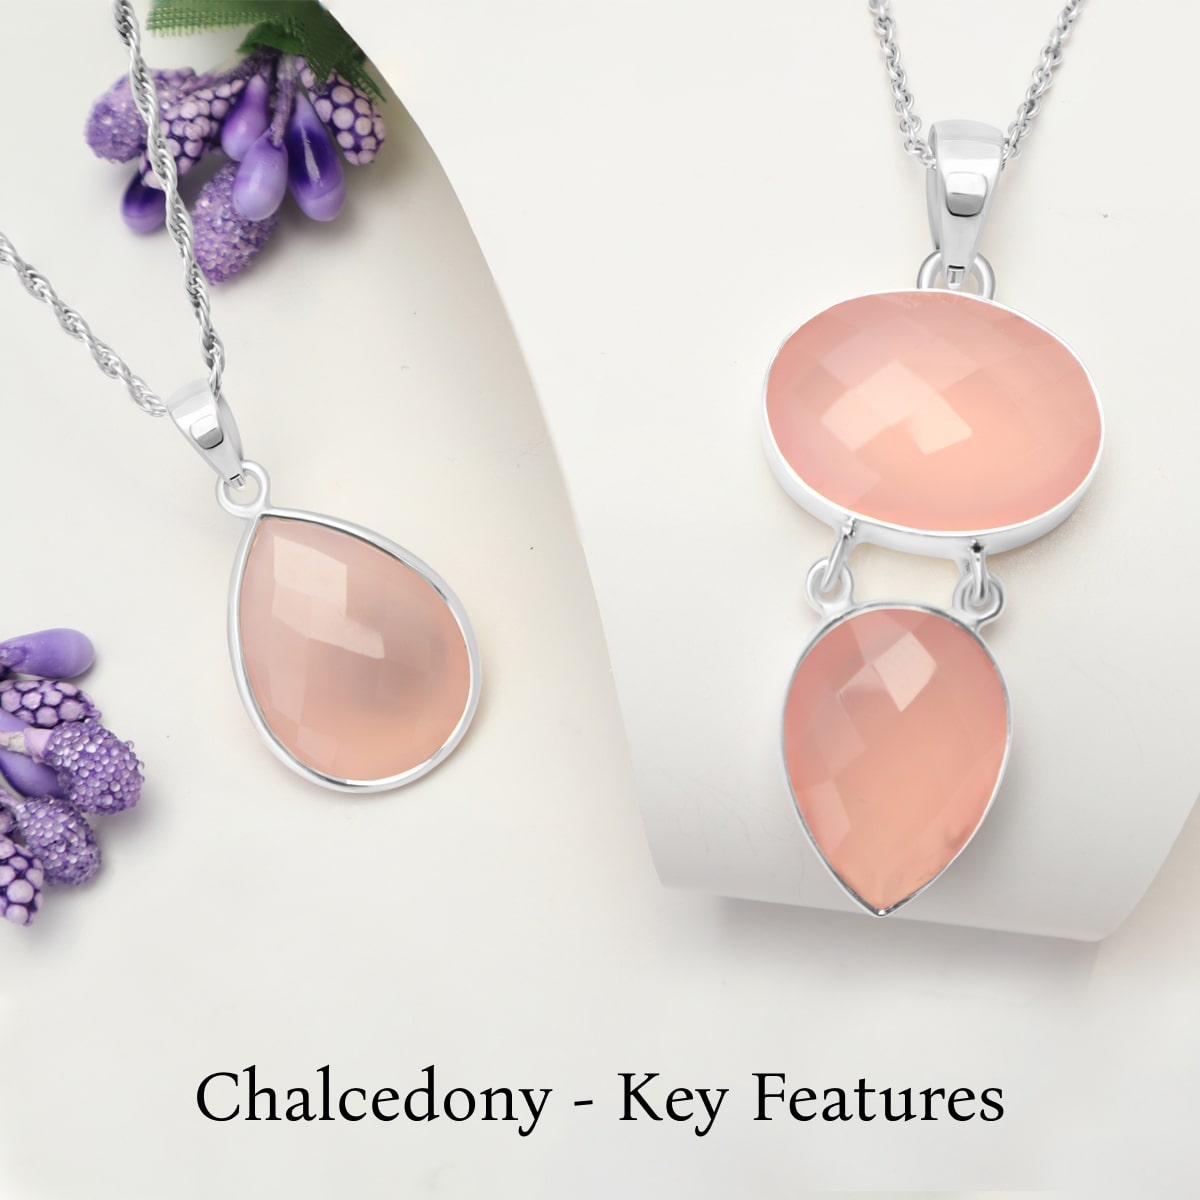 Characteristics of Chalcedony